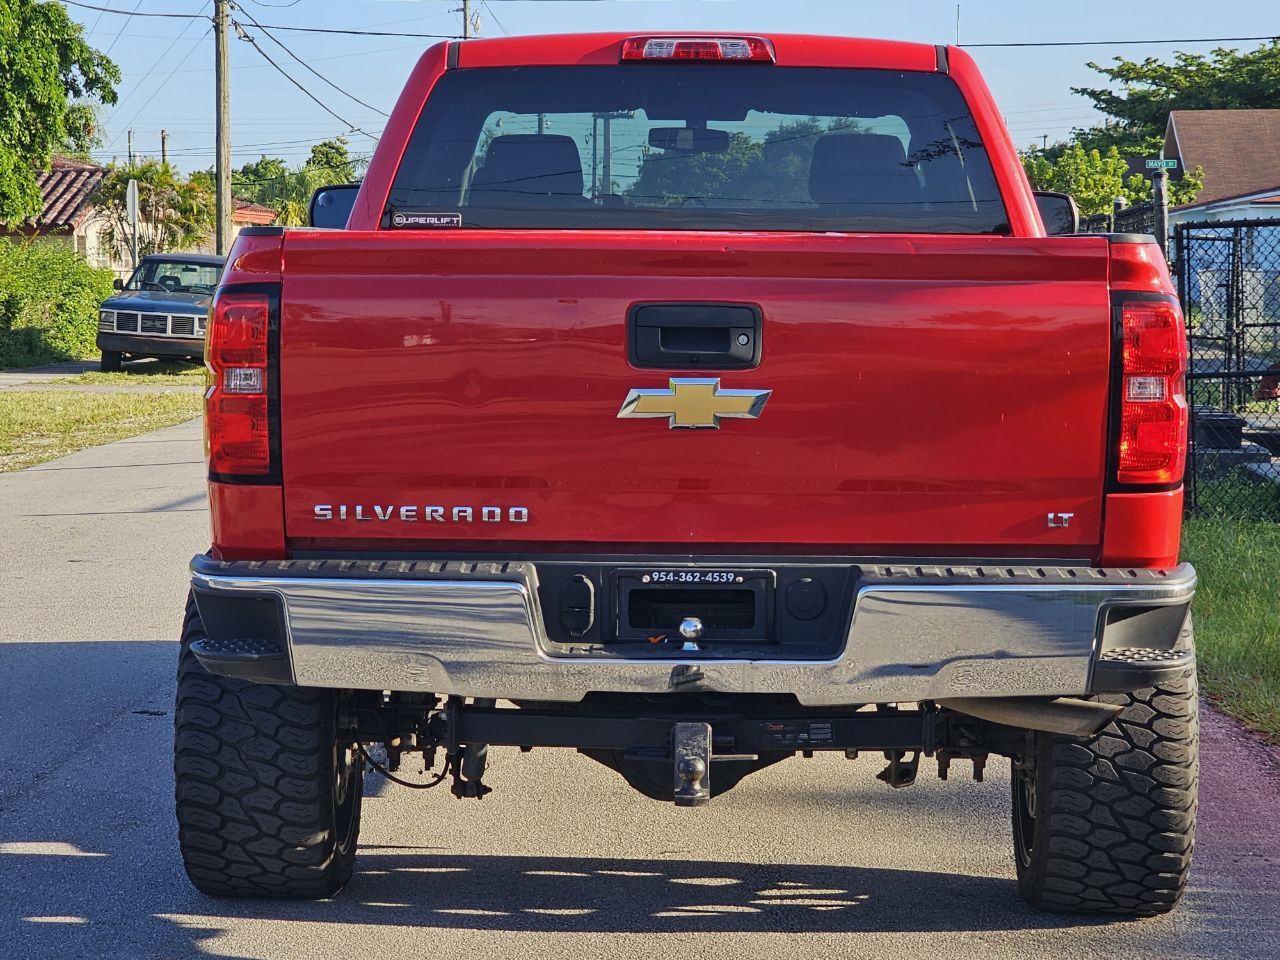 2018 CHEVROLET Silverado Pickup - $22,990